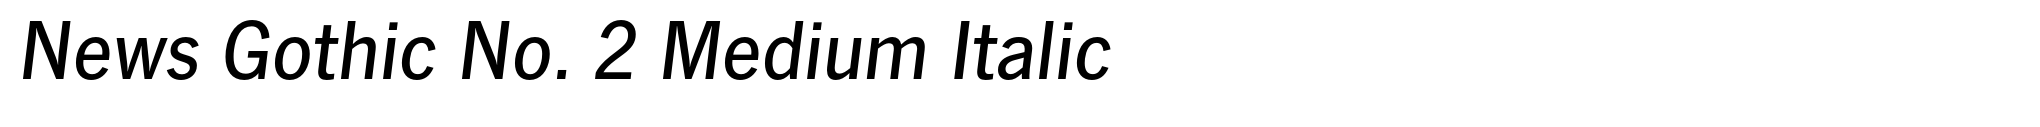 News Gothic No. 2 Medium Italic image